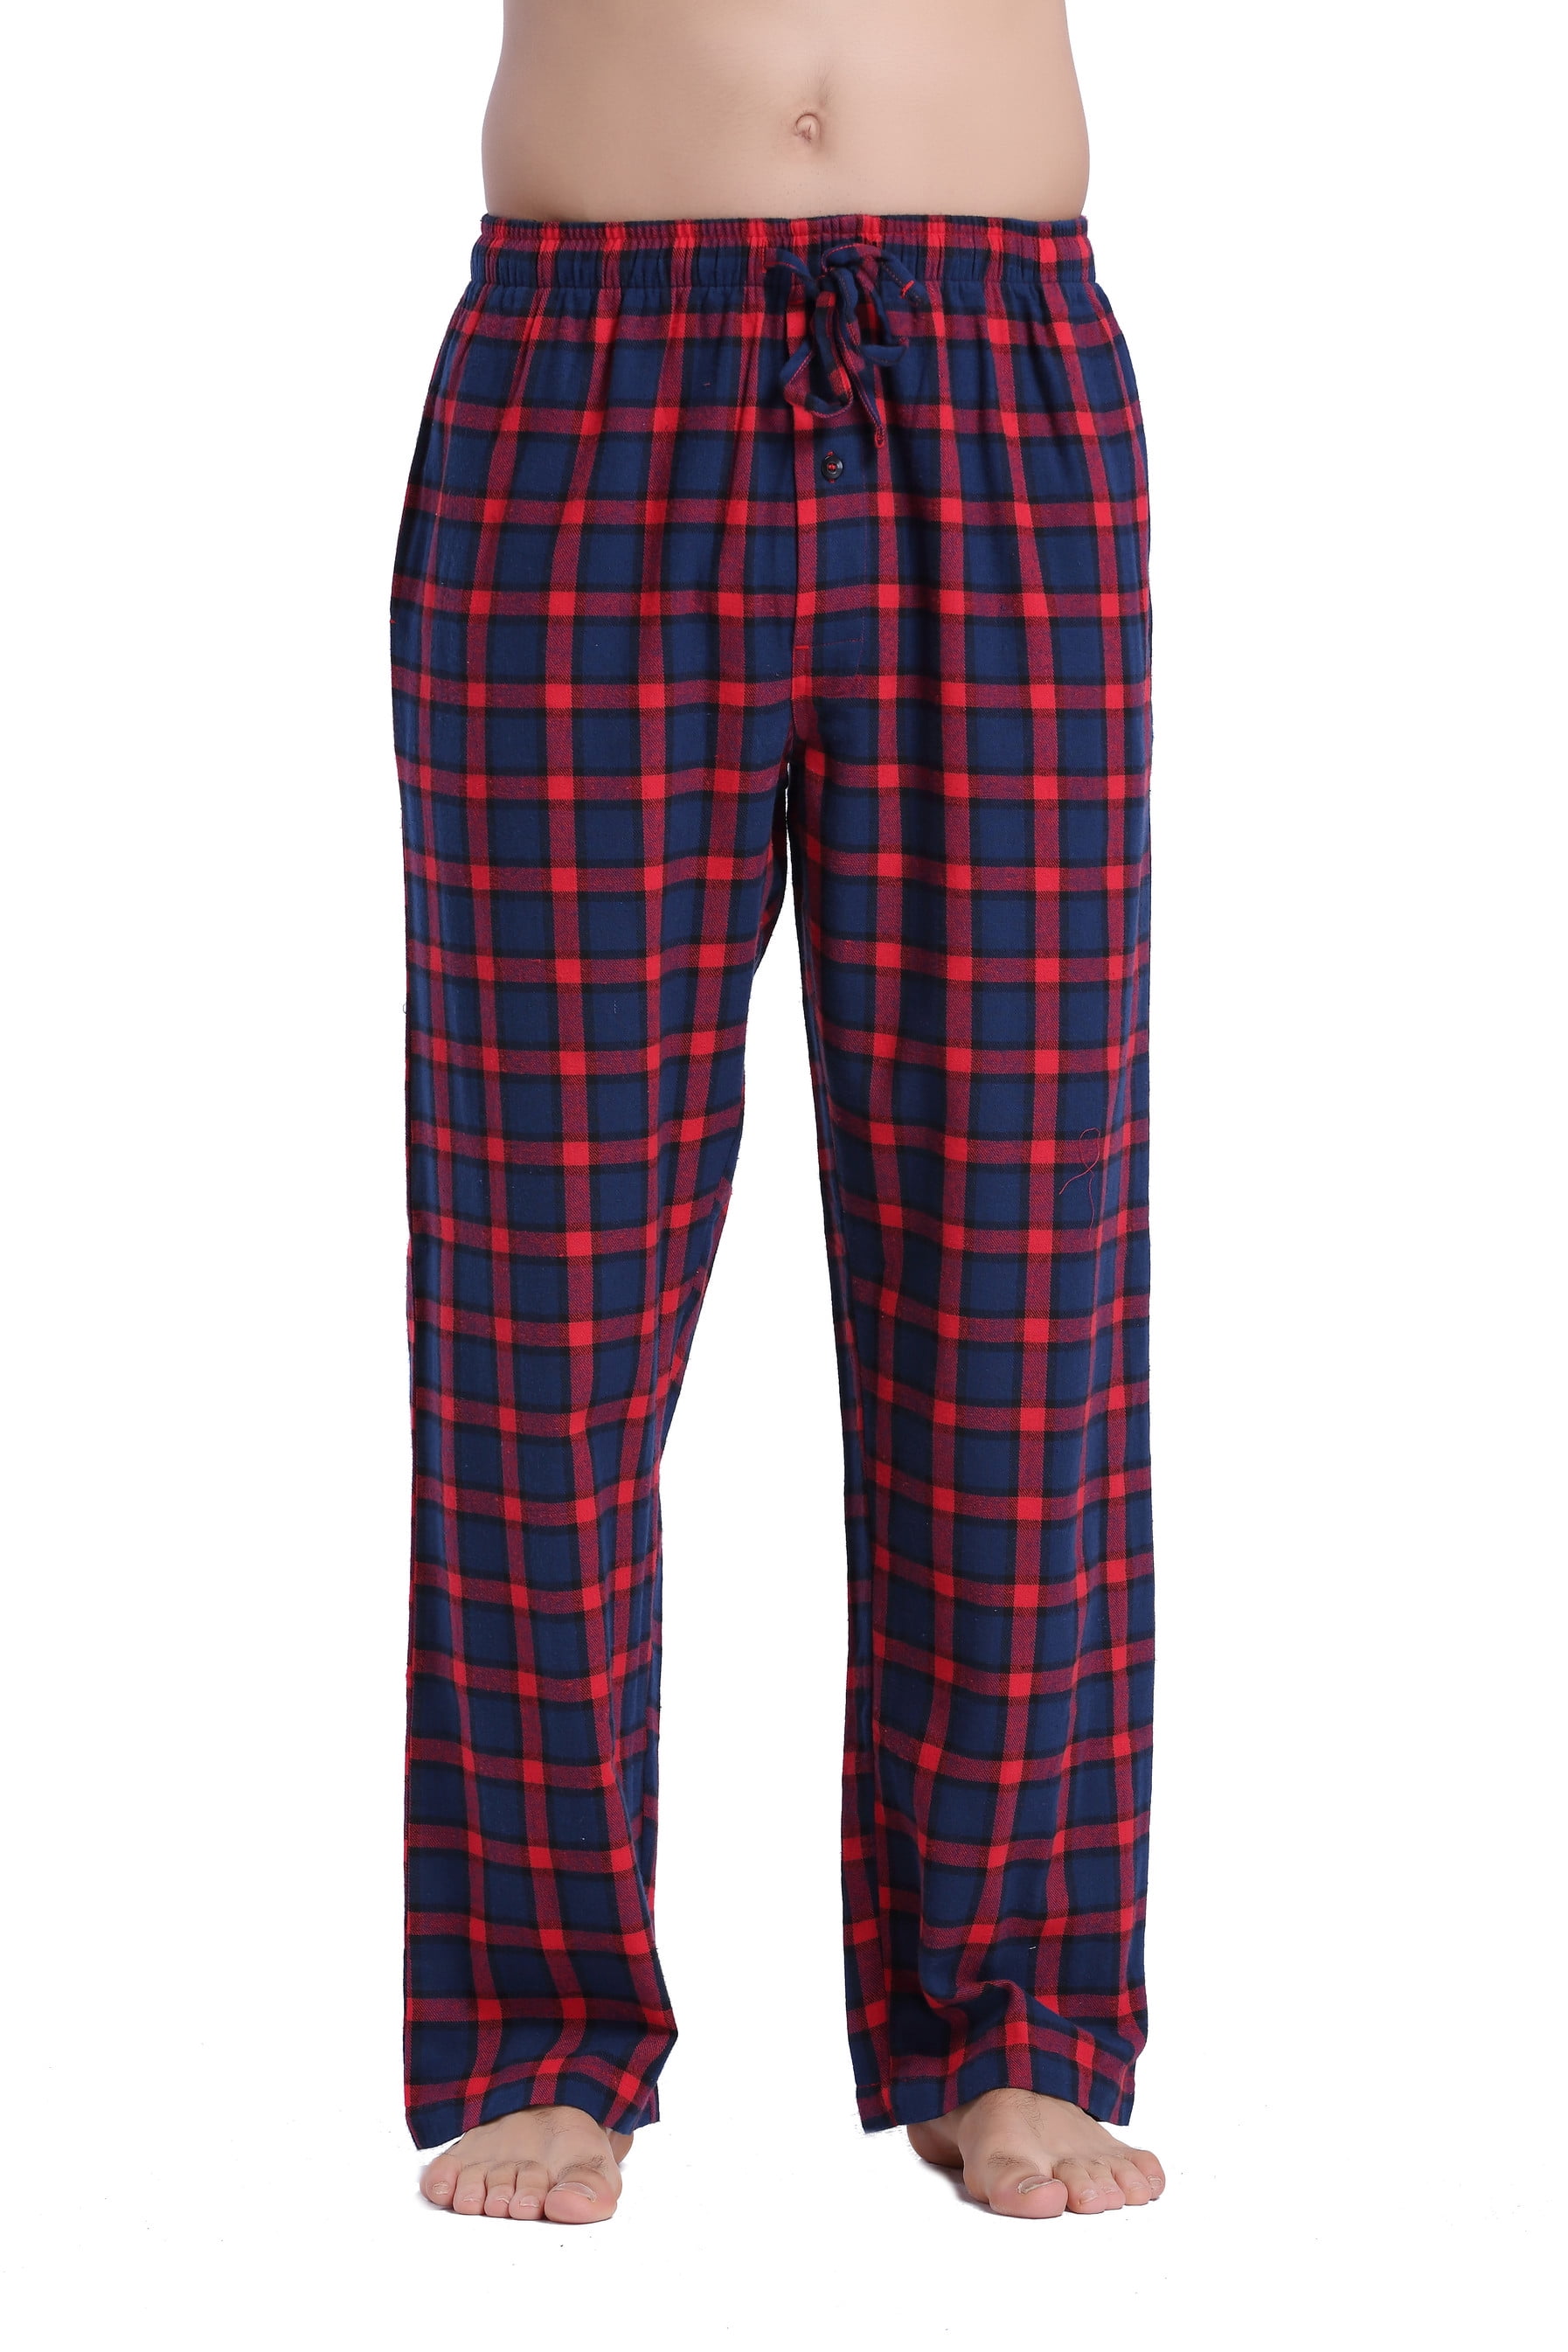 CYZ Men's 100% Cotton Super Soft Flannel Plaid Pajama Pants-NavyRed-XL ...